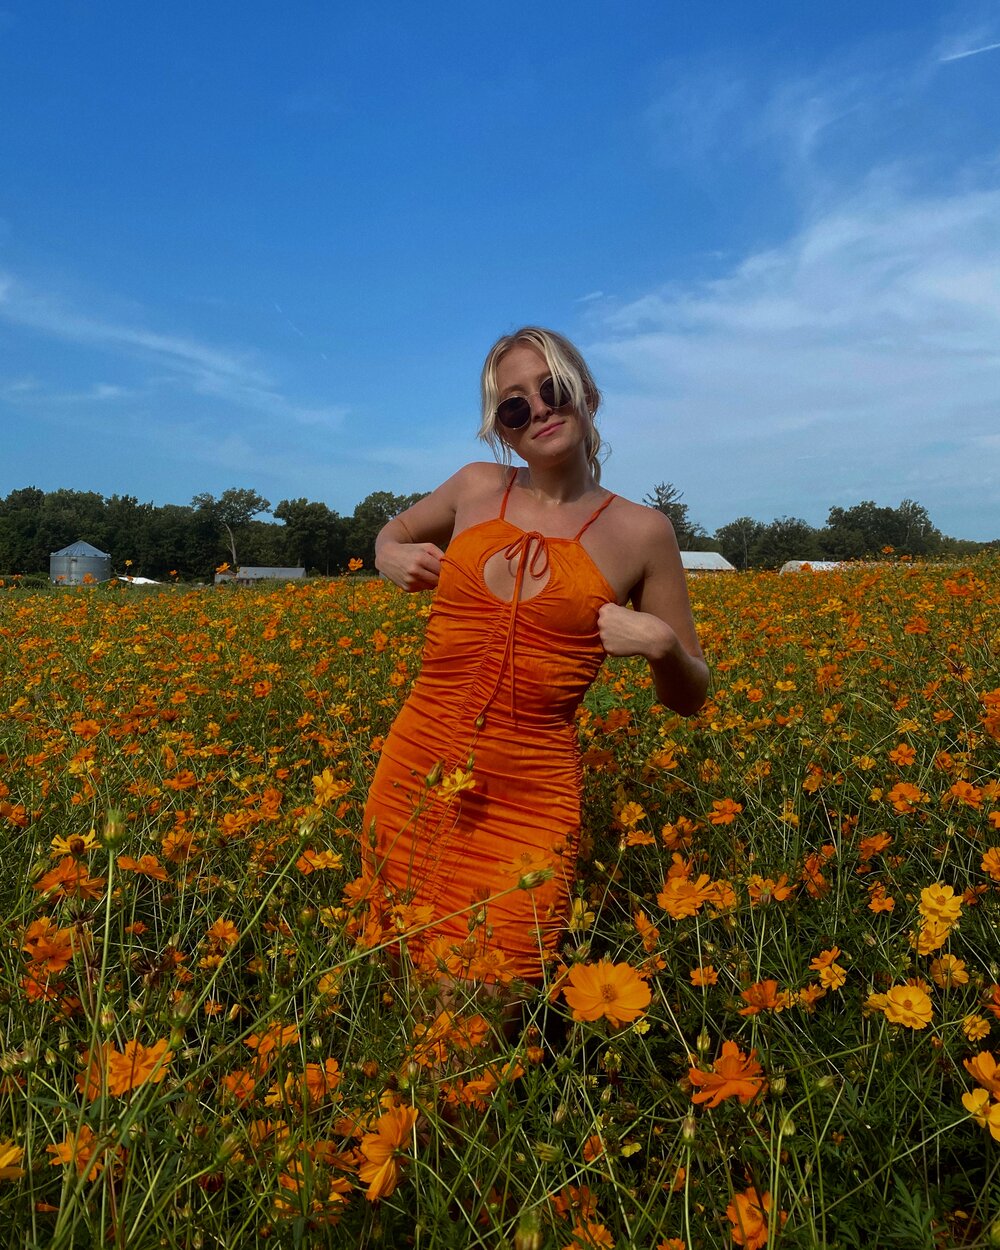 Jordan Criss Cross Dress superdown 3 orange flower fields.JPG